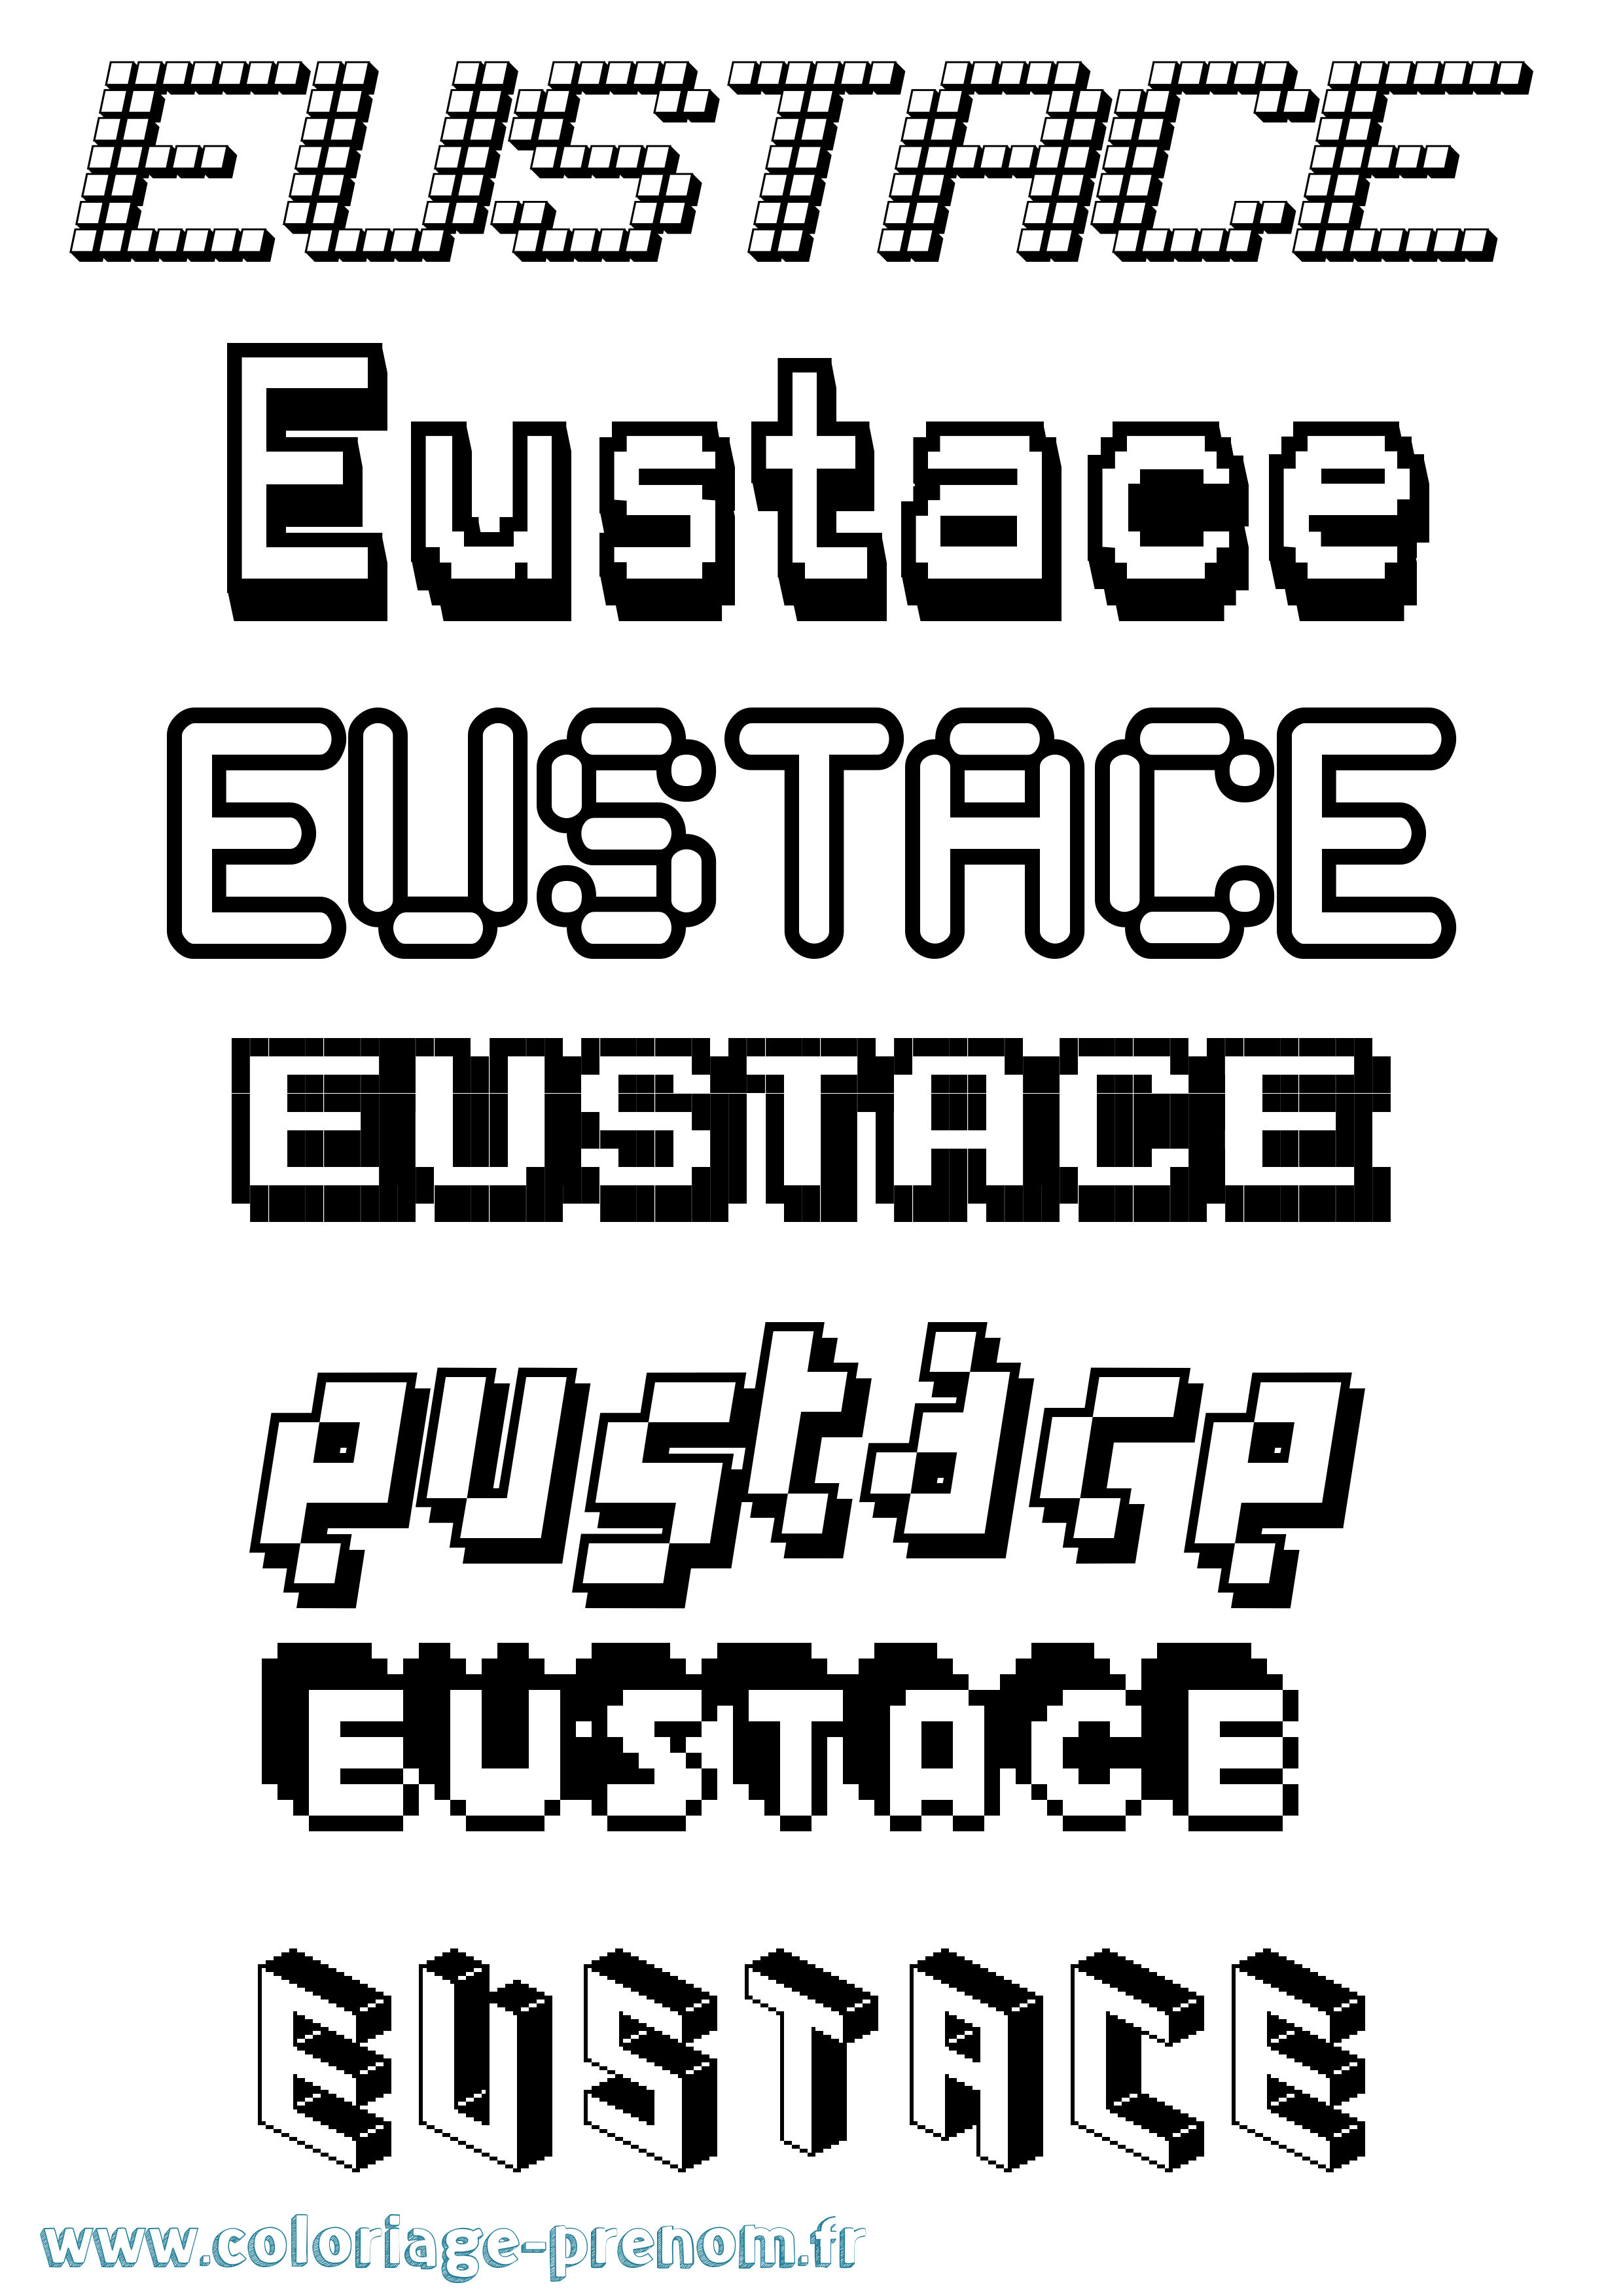 Coloriage prénom Eustace Pixel